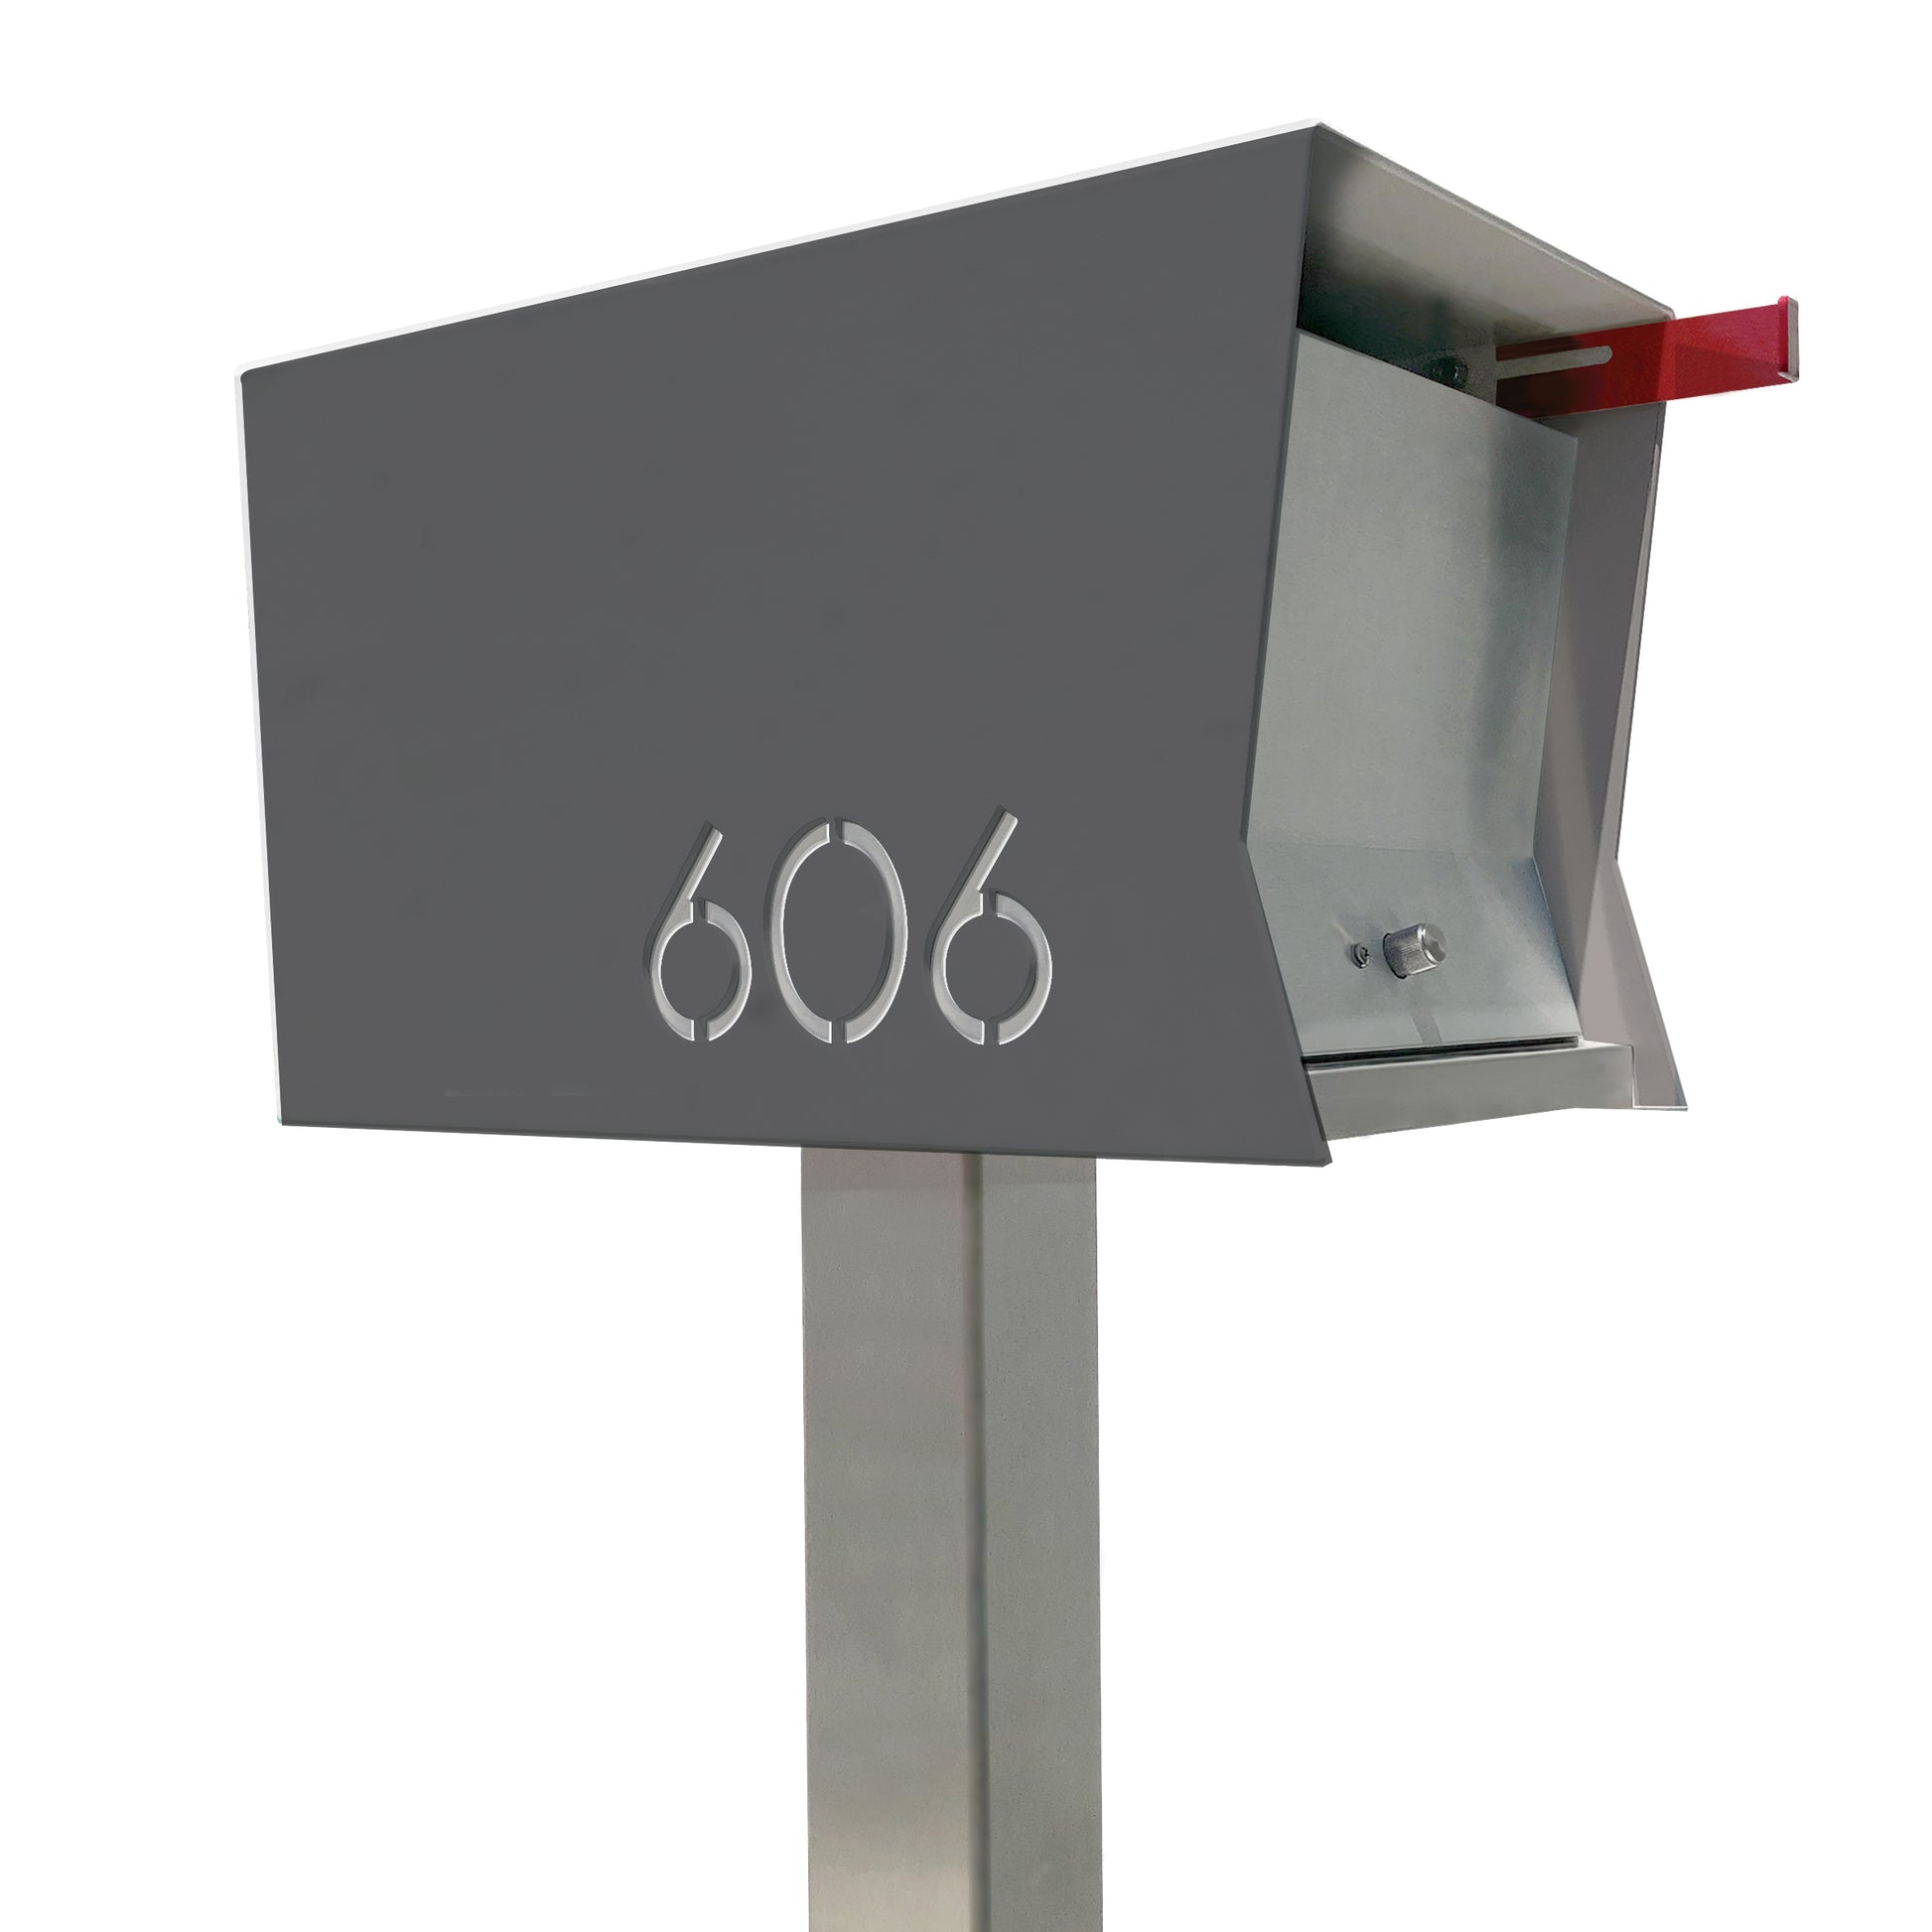 The Original Retrobox in DESIGNER GRAY - Modern Mailbox grey and grey